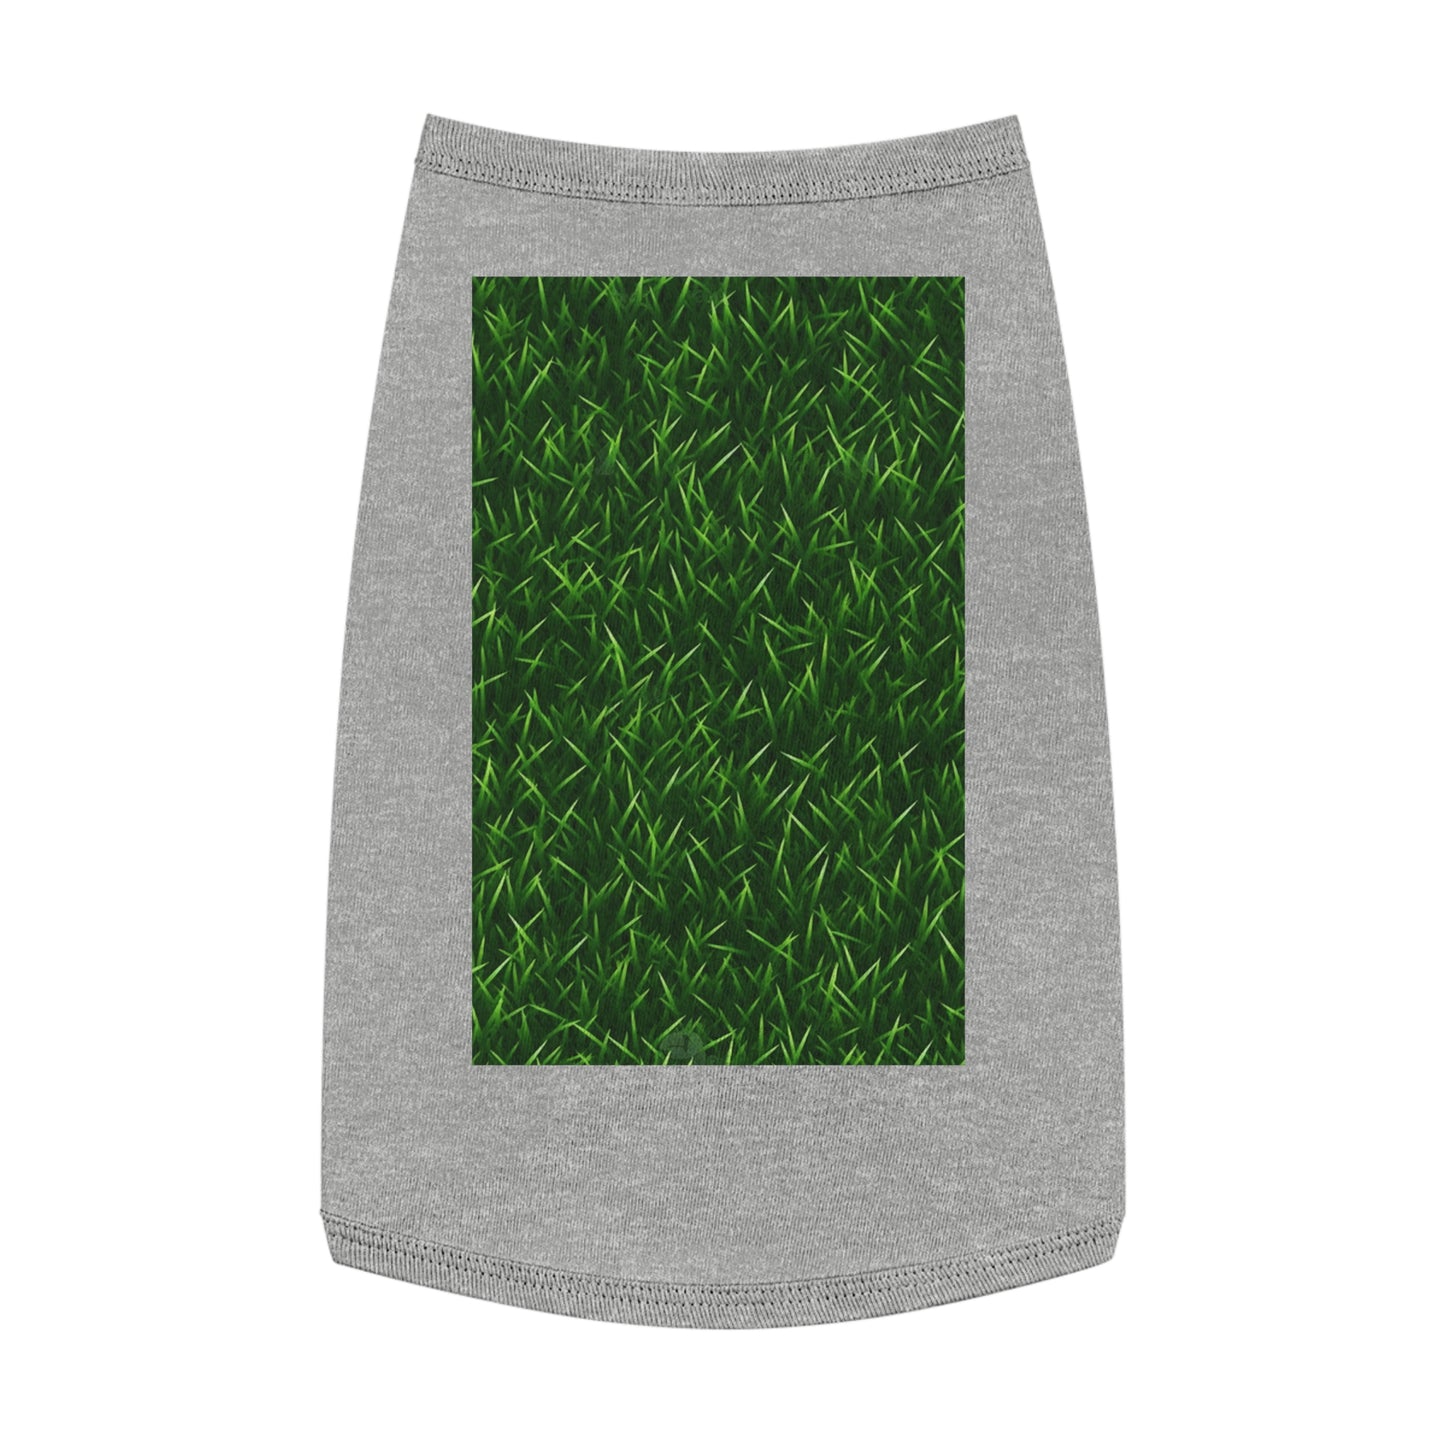 Touch Grass Indoor Style Outdoor Green Artificial Grass Turf - Dog & Pet Tank Top